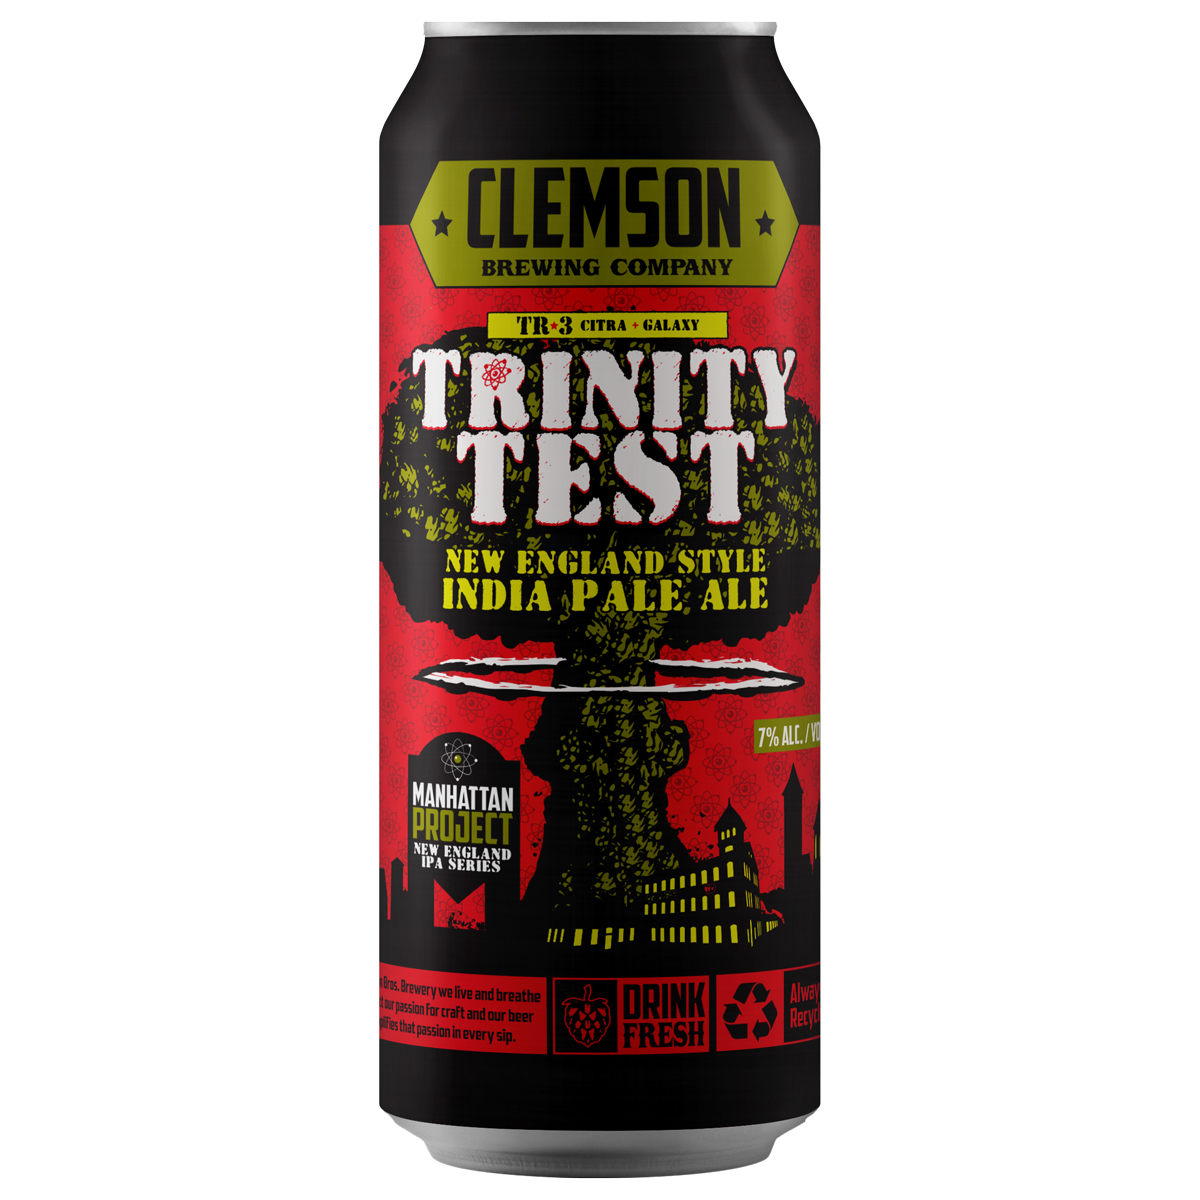 Clemson Bros. Brewery TR-3